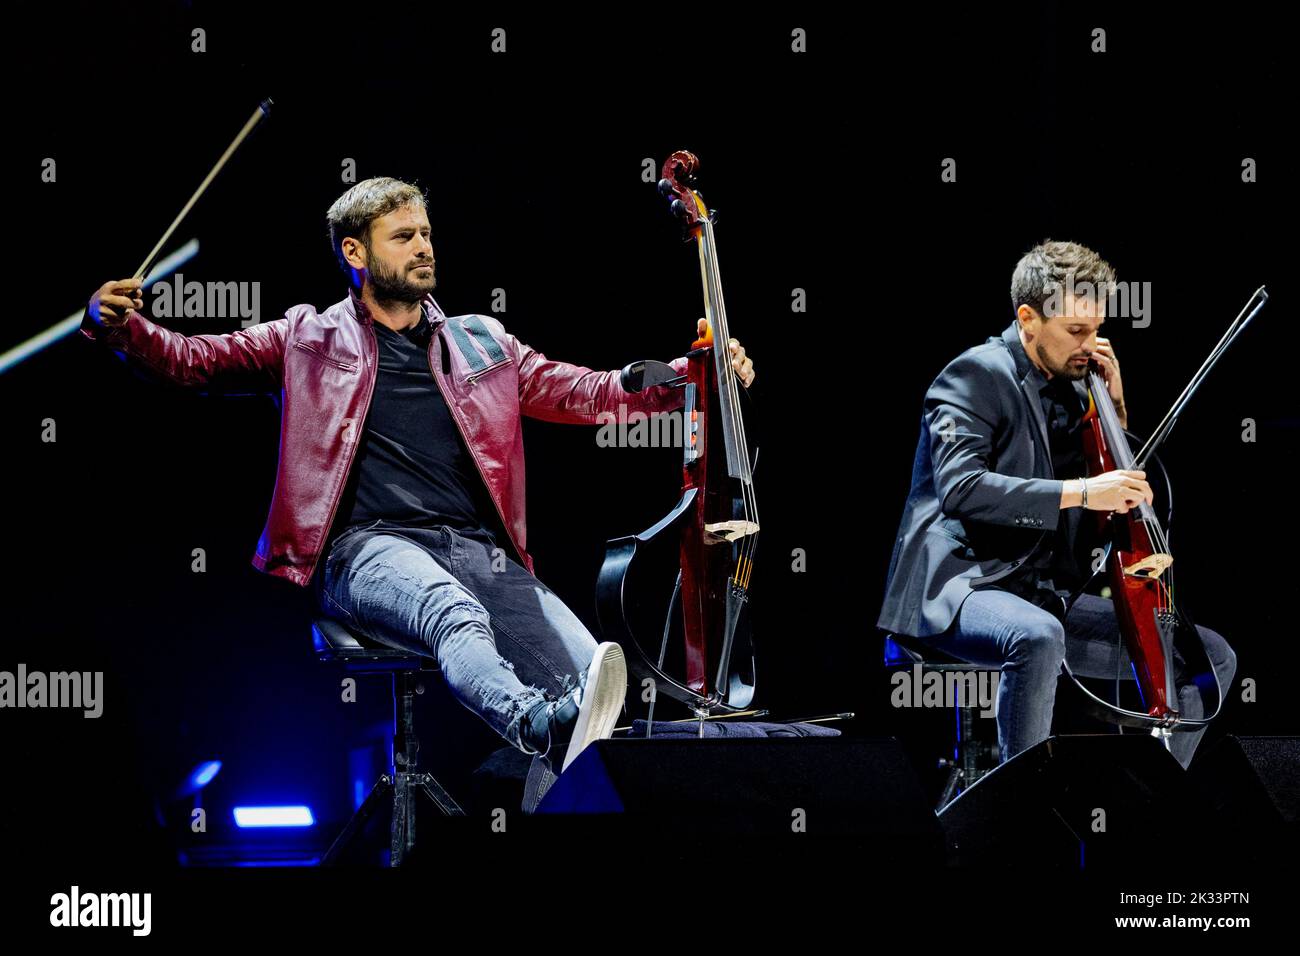 Verona Italy 22 September 2022 2Cellos - Stjepan Hauser and Luka Šulić the Final Tour - live at Arena di Verona © Andrea Ripamonti / Alamy Stock Photo